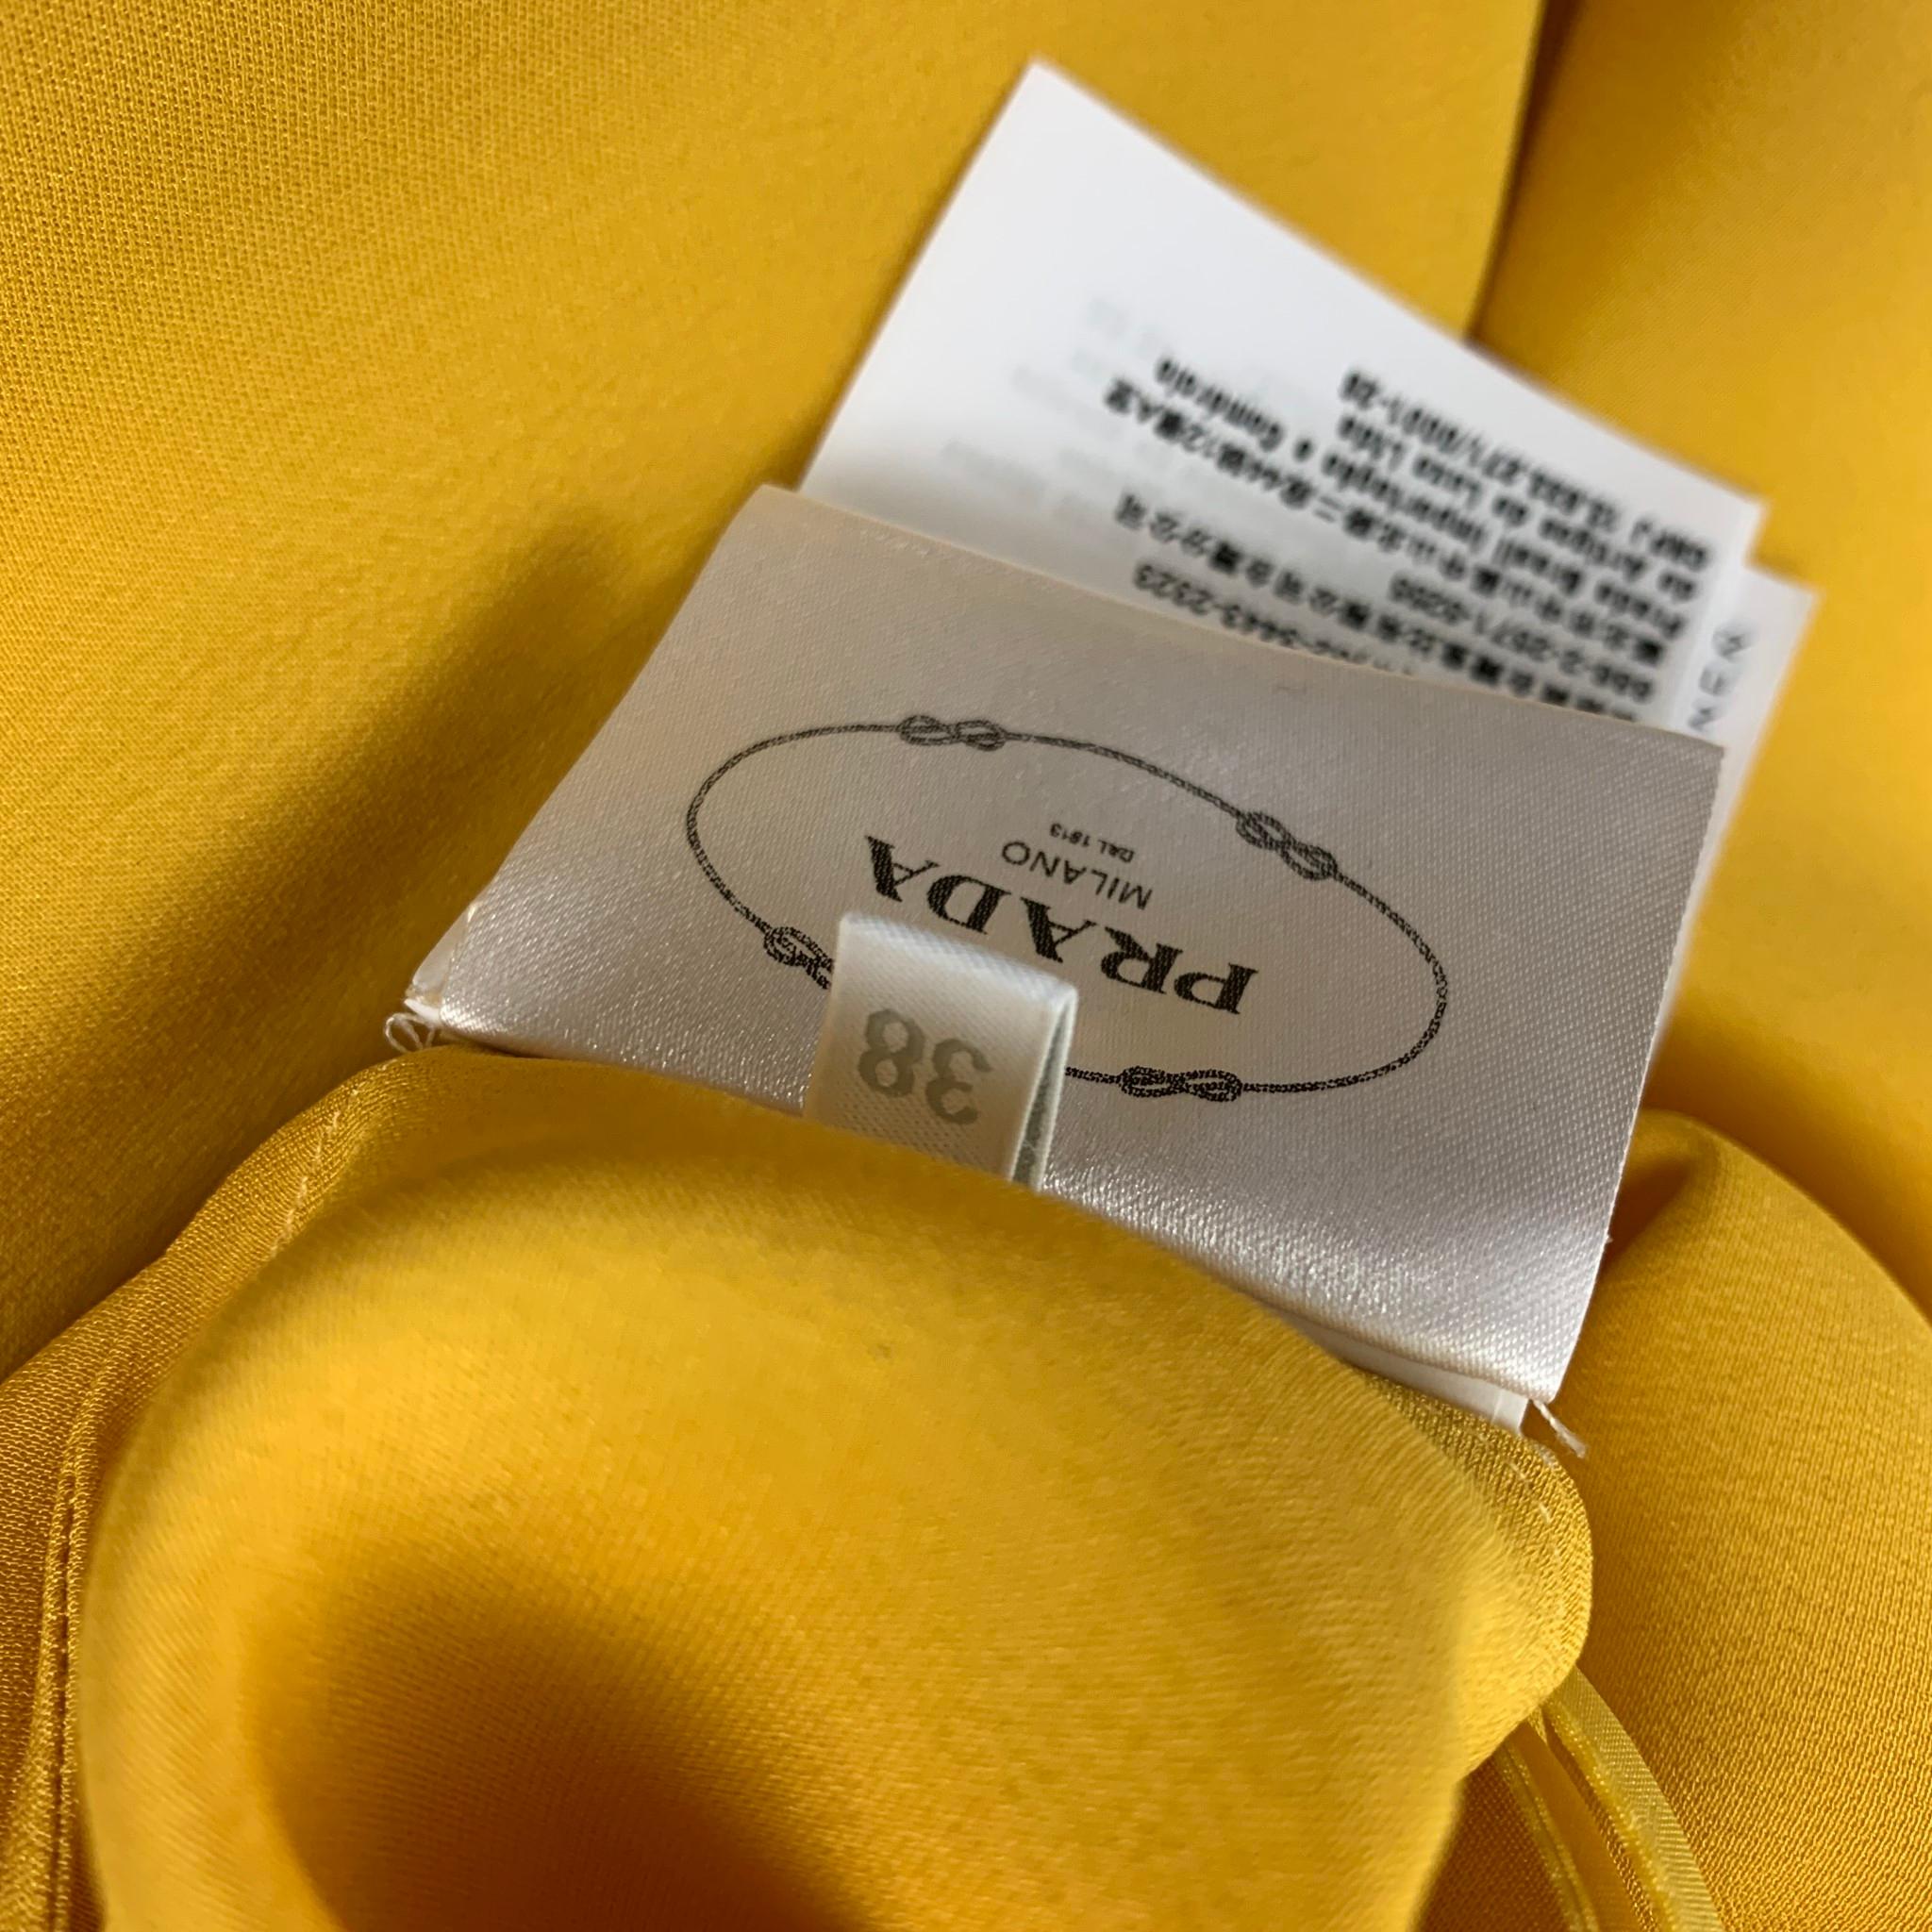  PRADA - Robe à bretelles spaghetti en soie dorée avec logo, taille 2 Pour femmes 